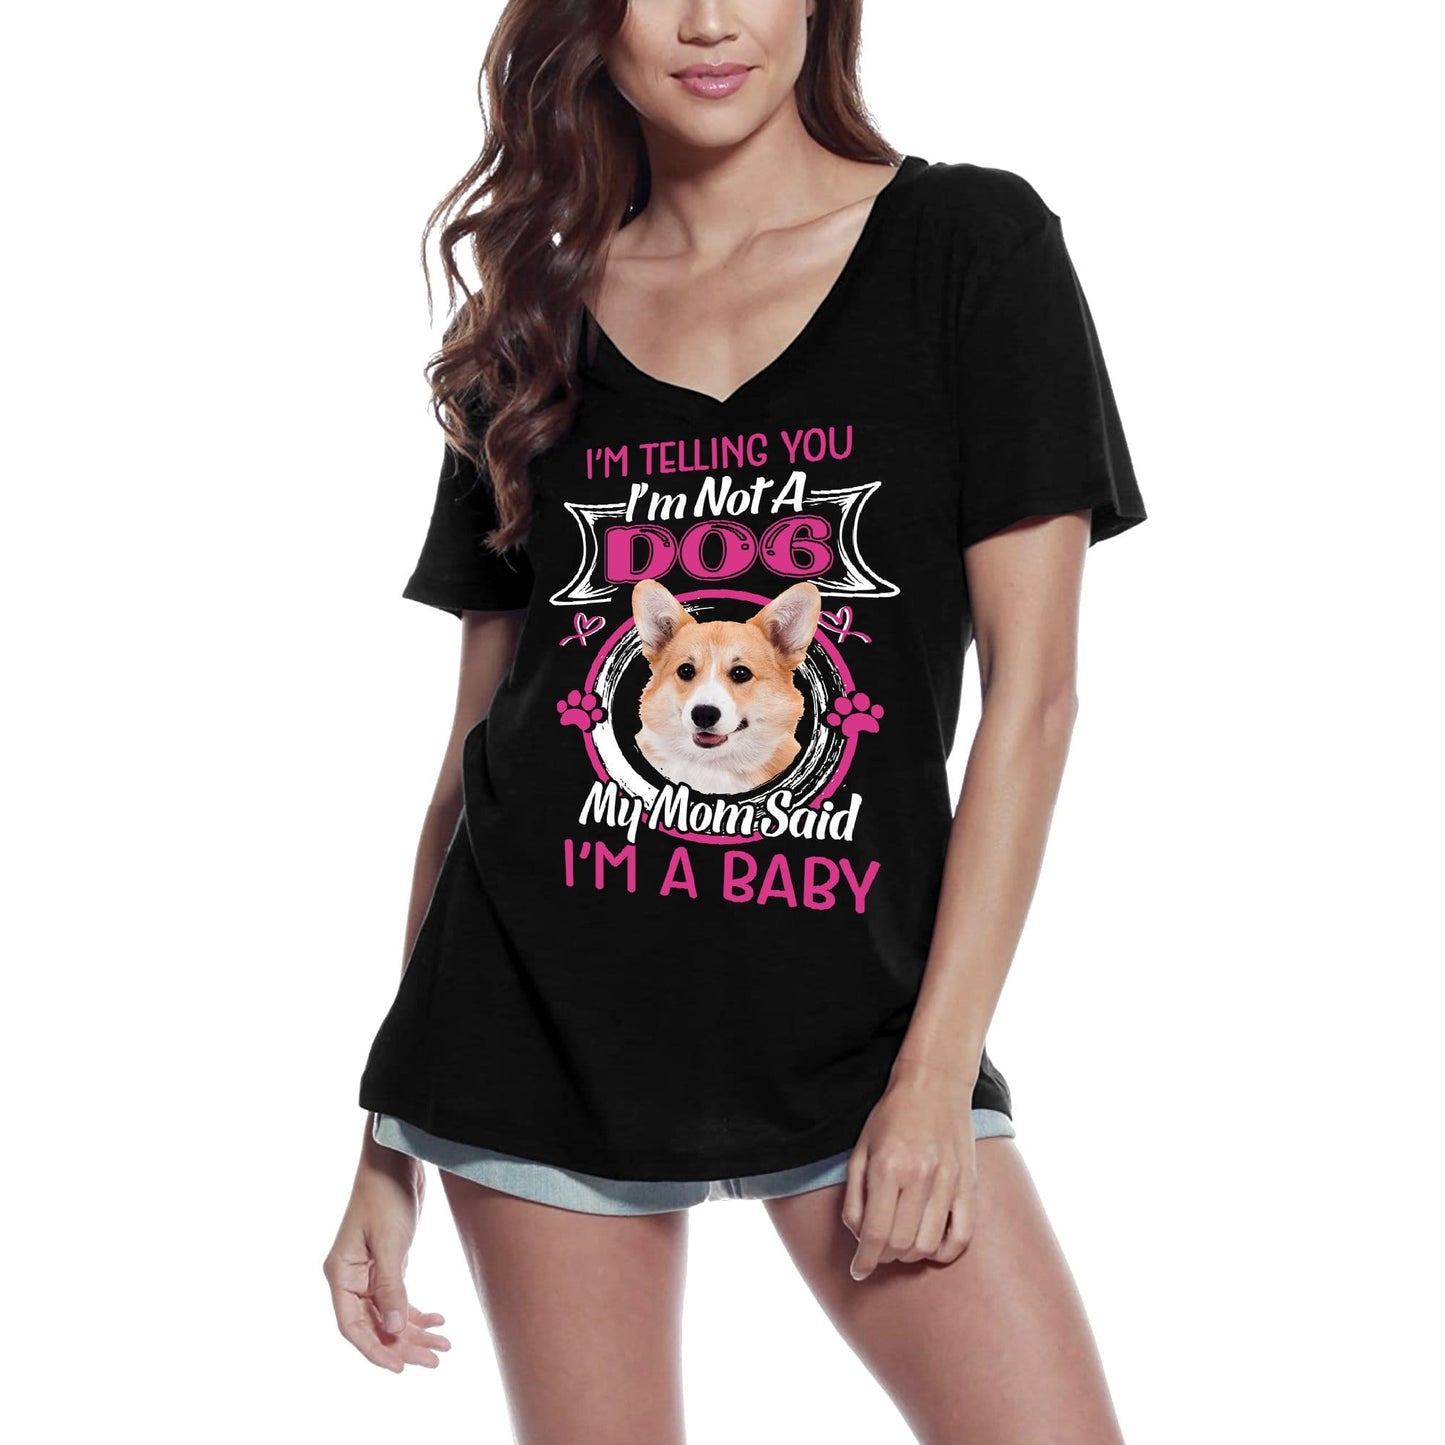 ULTRABASIC Women's T-Shirt I'm Telling You I'm Not a Pembroke Welsh Corgi - My Mom Said I'm a Baby - Cute Puppy Dog Lover Tee Shirt